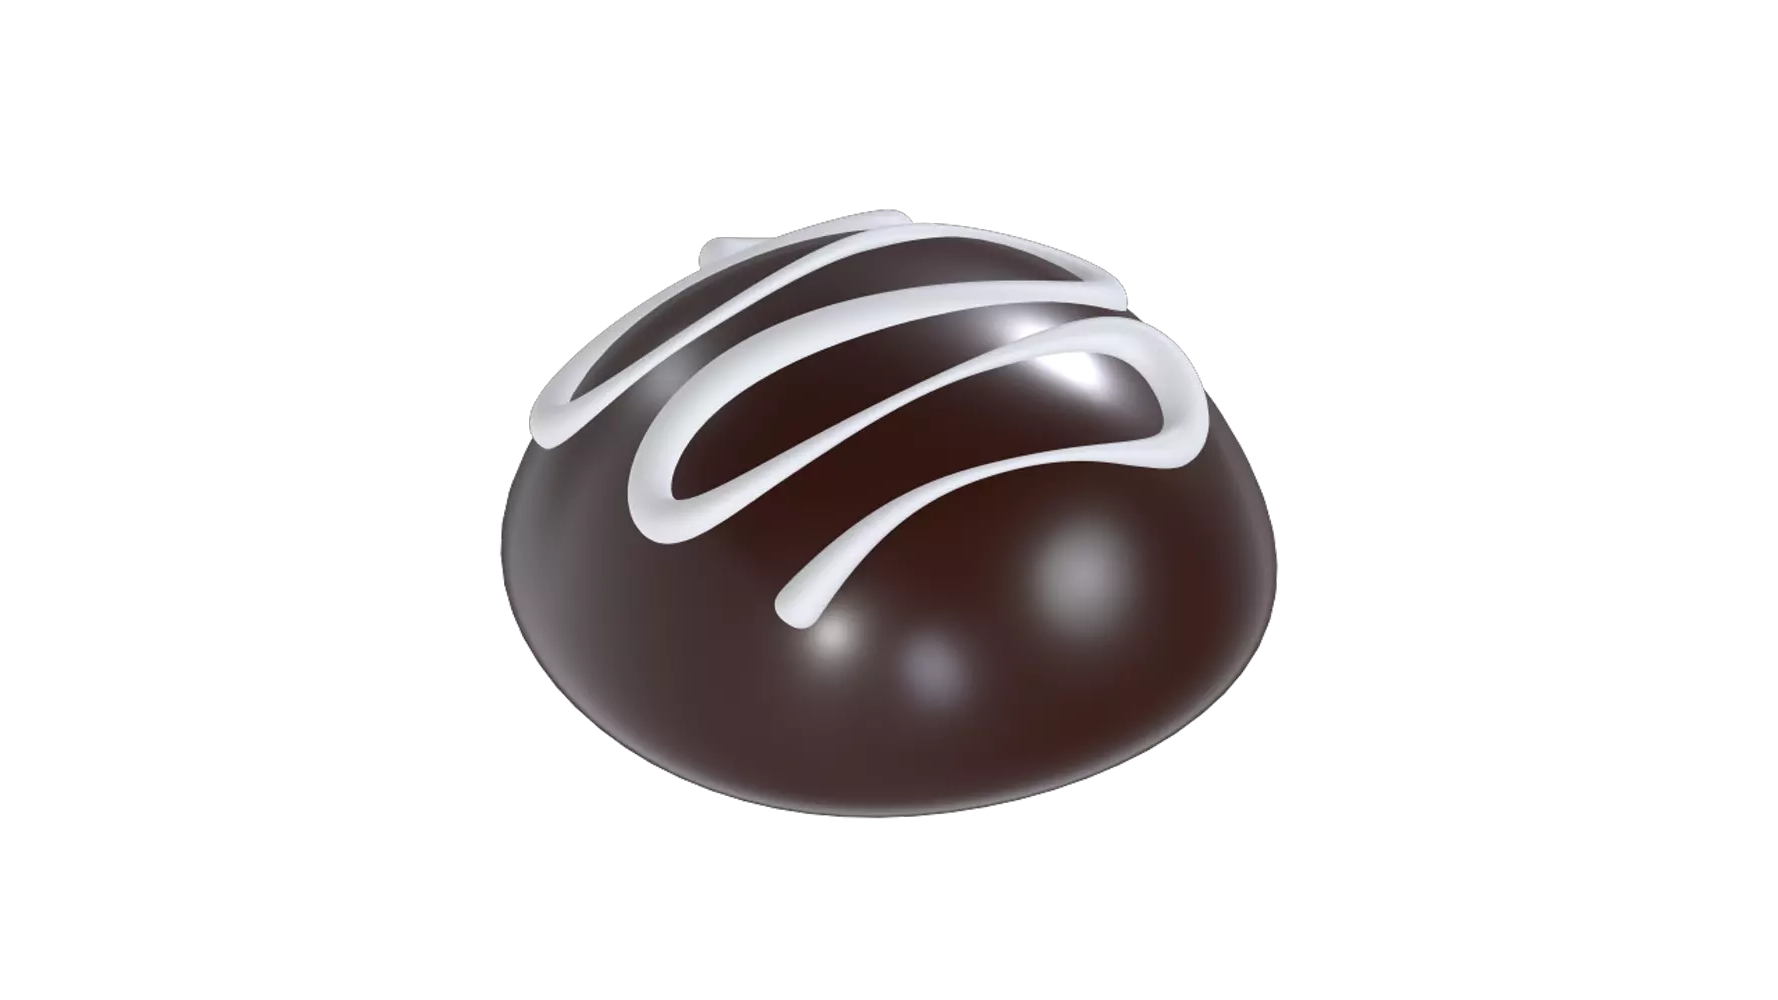 Choco Pie 3D Graphic